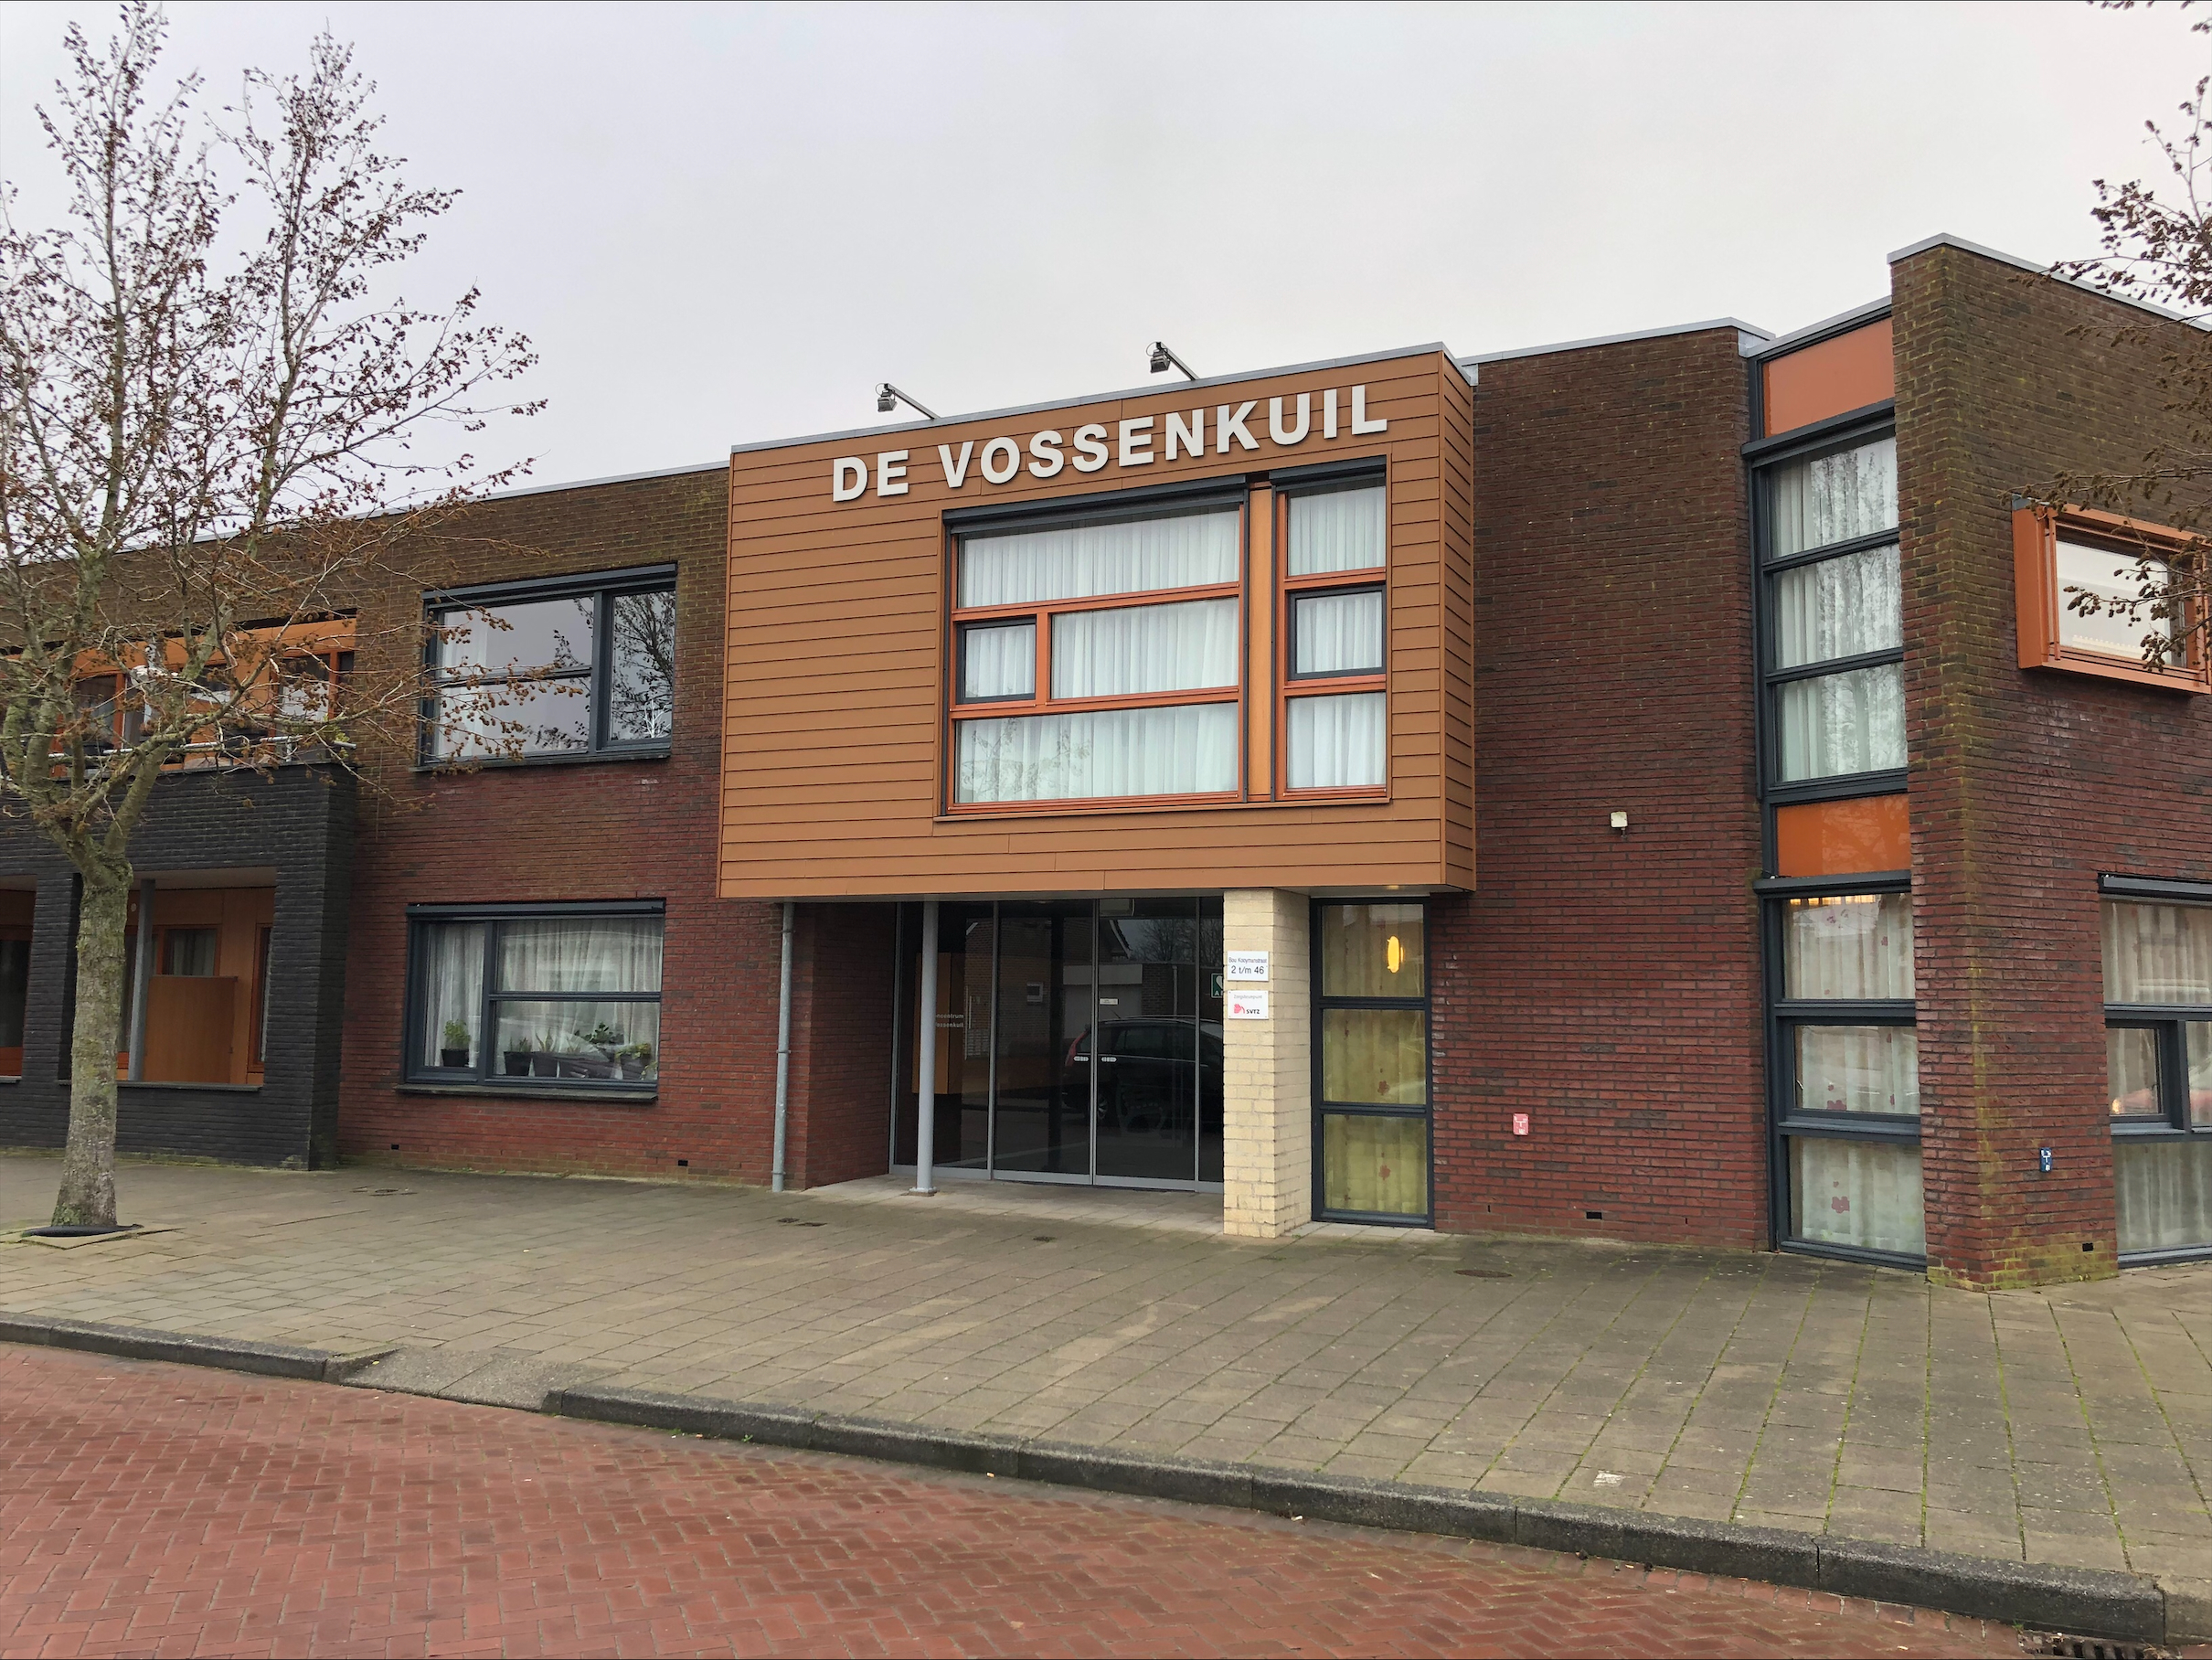 Bou Kooijmanstraat 6, 4698 AM Oud-Vossemeer, Nederland